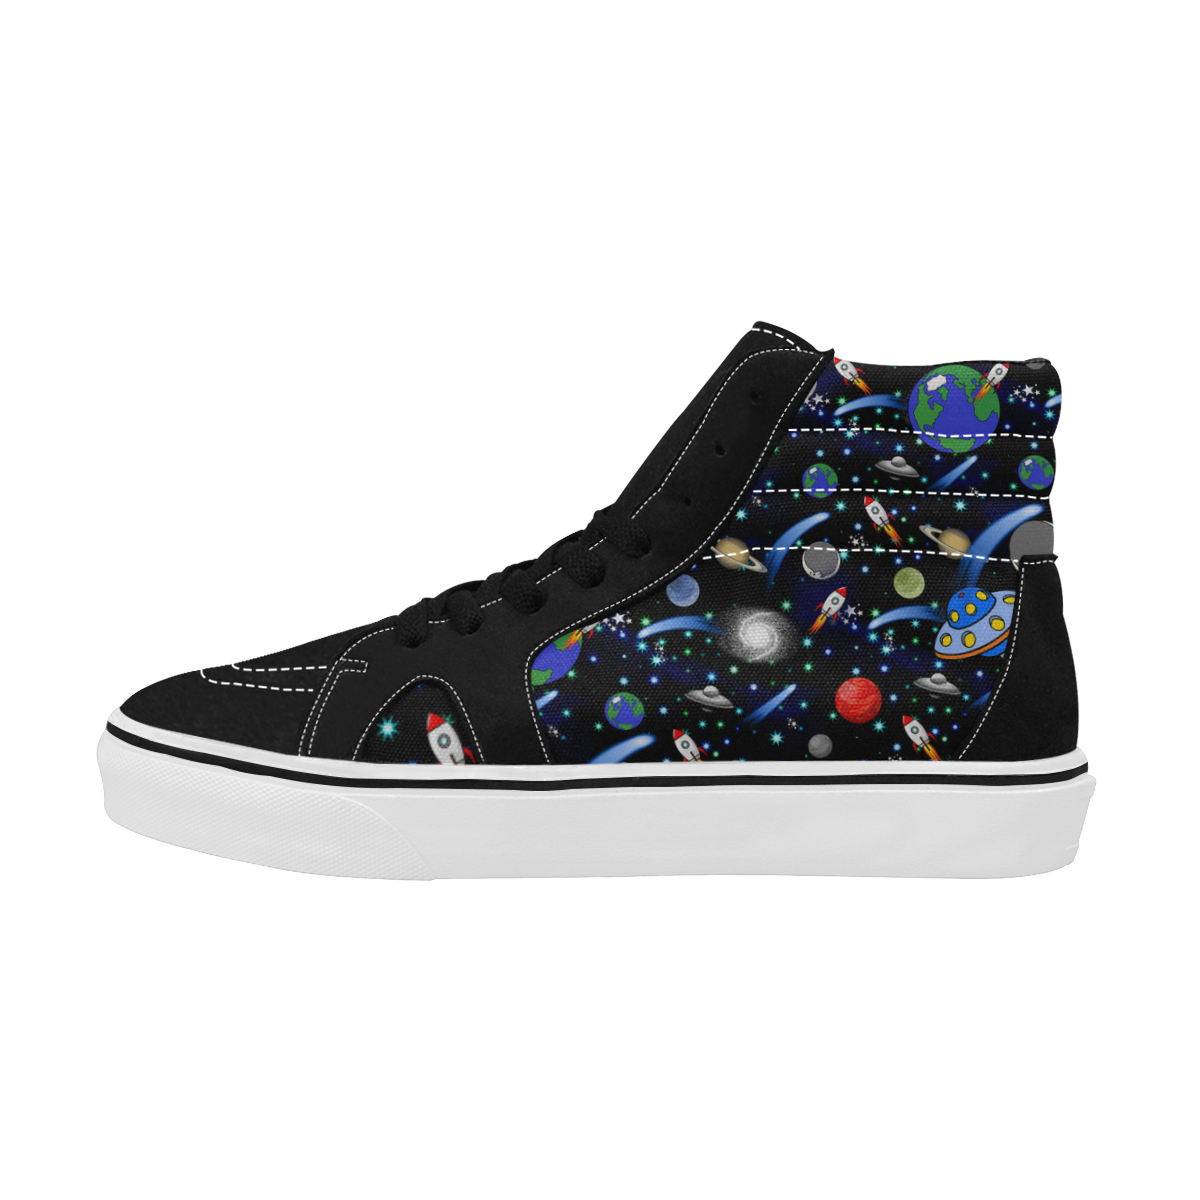 Galaxy Universe - Planets, Stars, Comets, Rockets Men's High Top Skateboarding Shoes (Model E001-1)